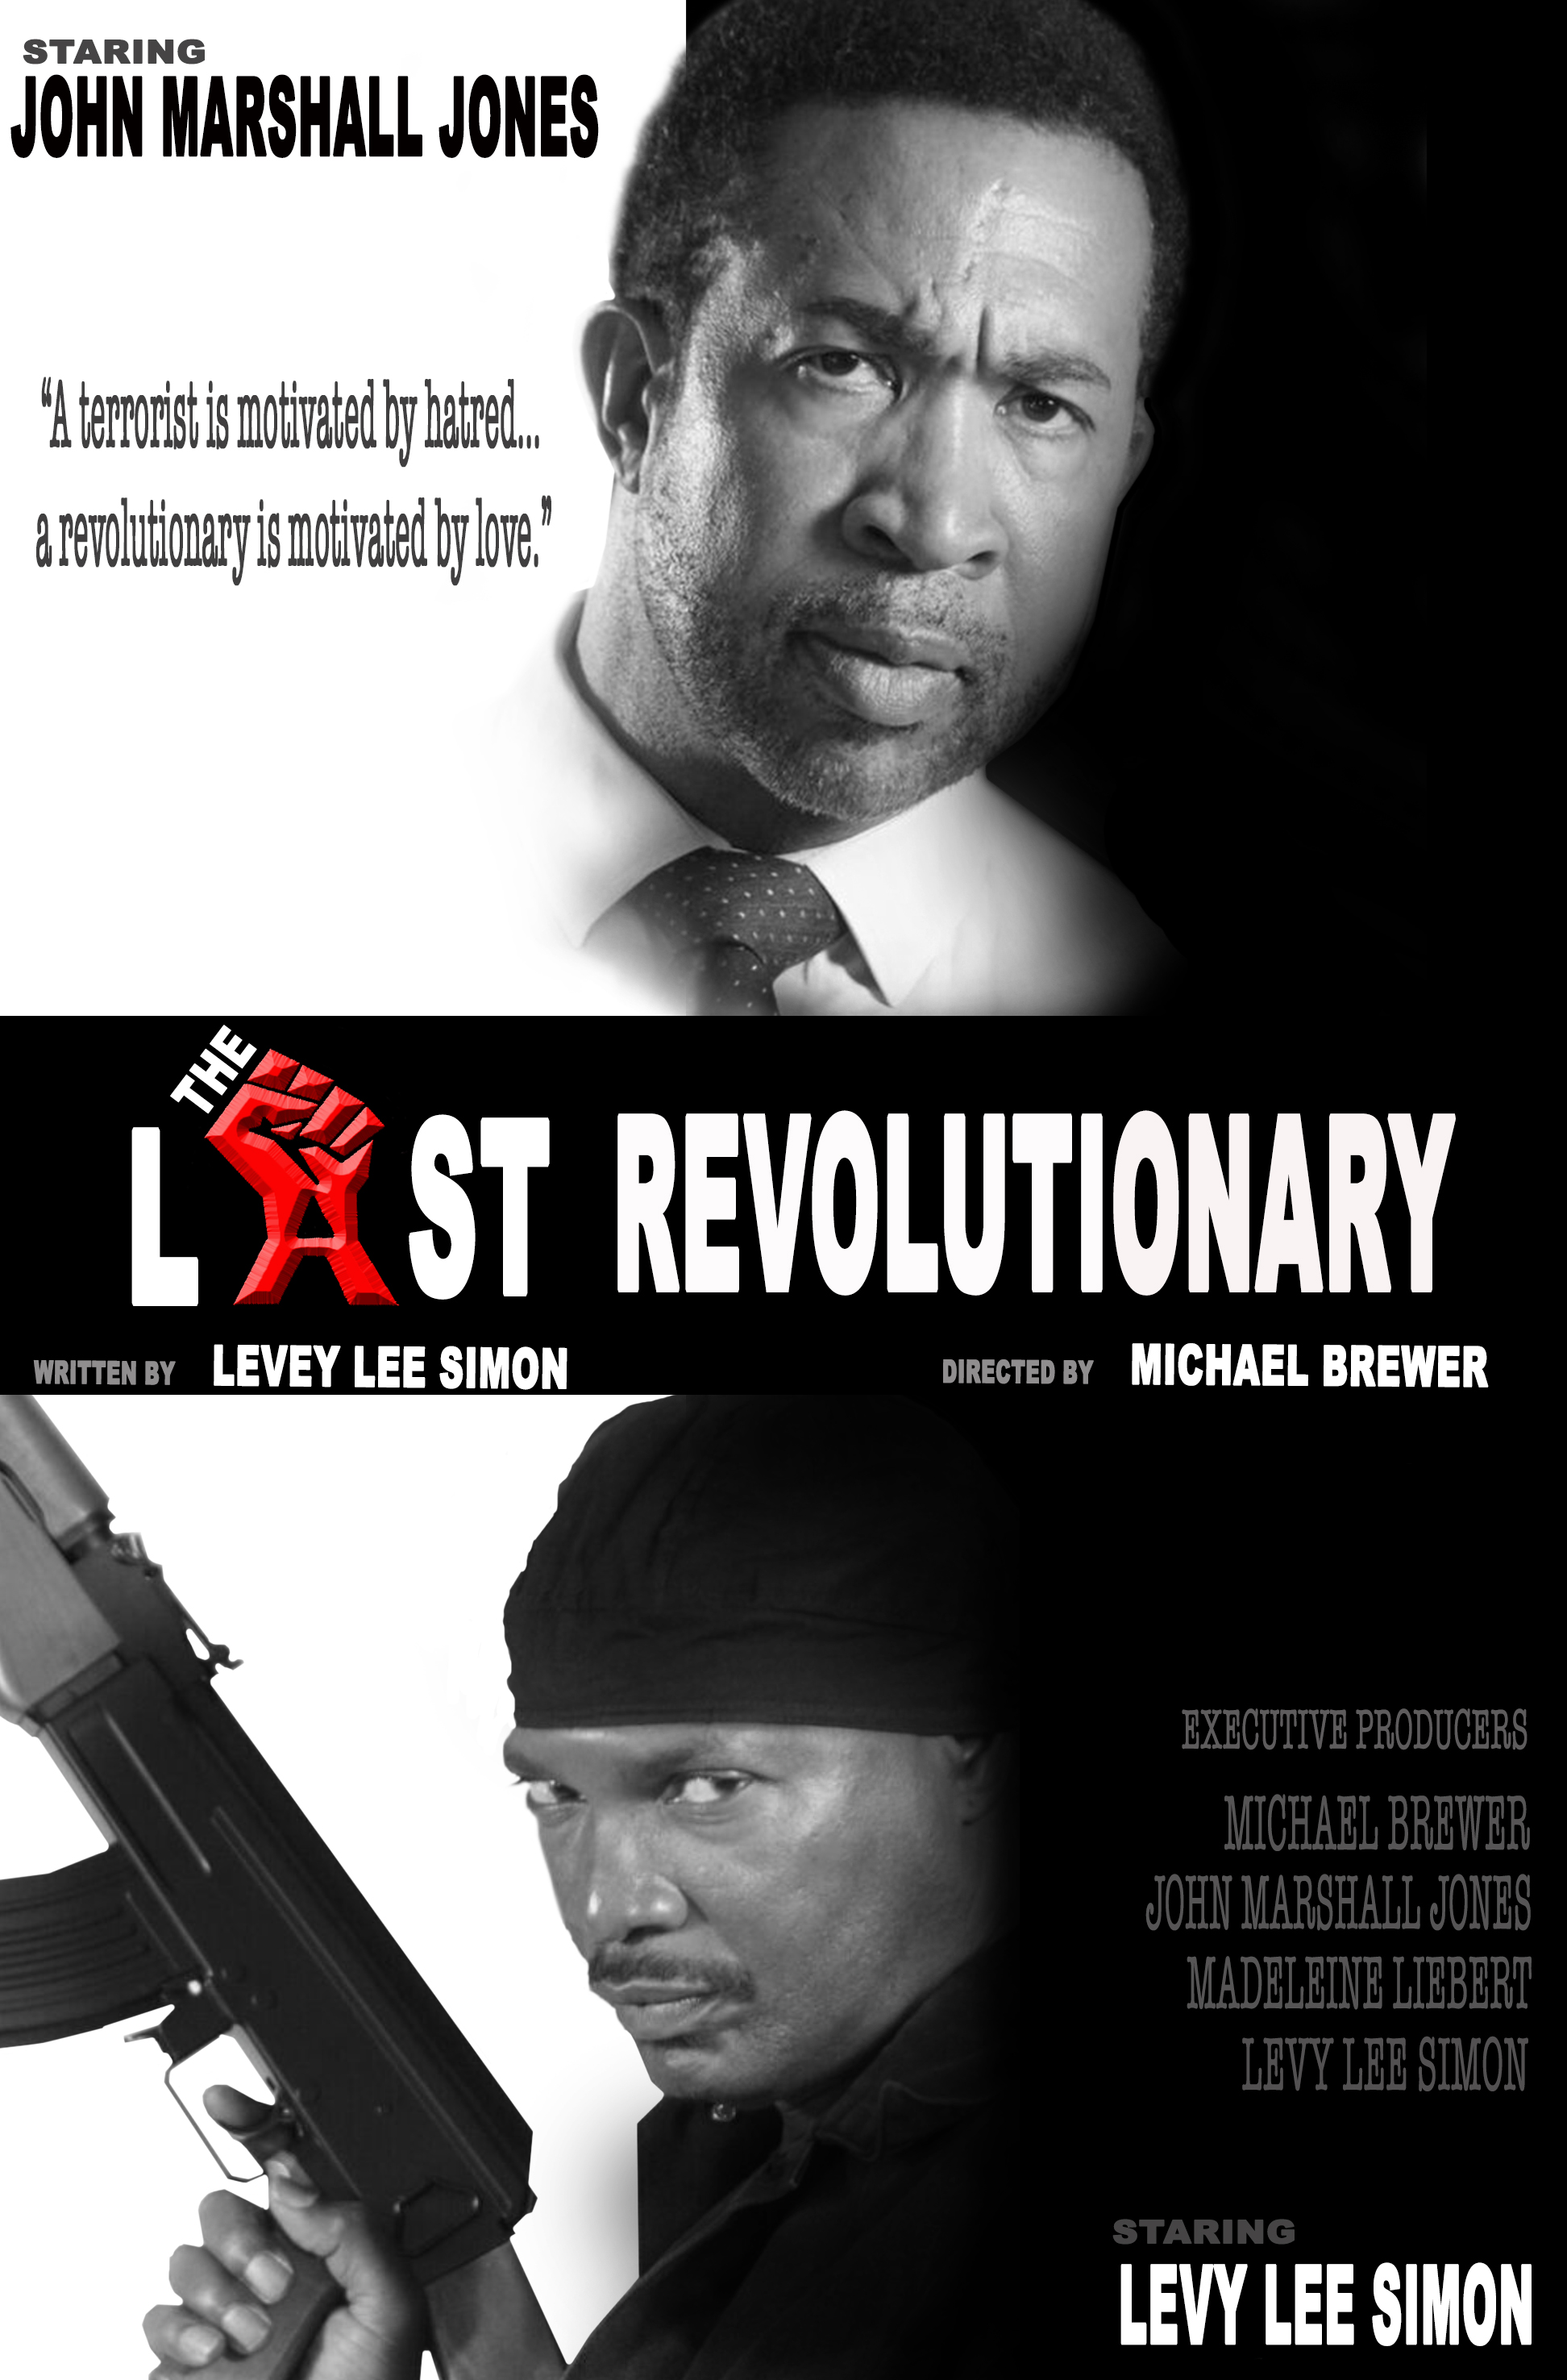 the-last-rev-movie-poster_3-12-16-2